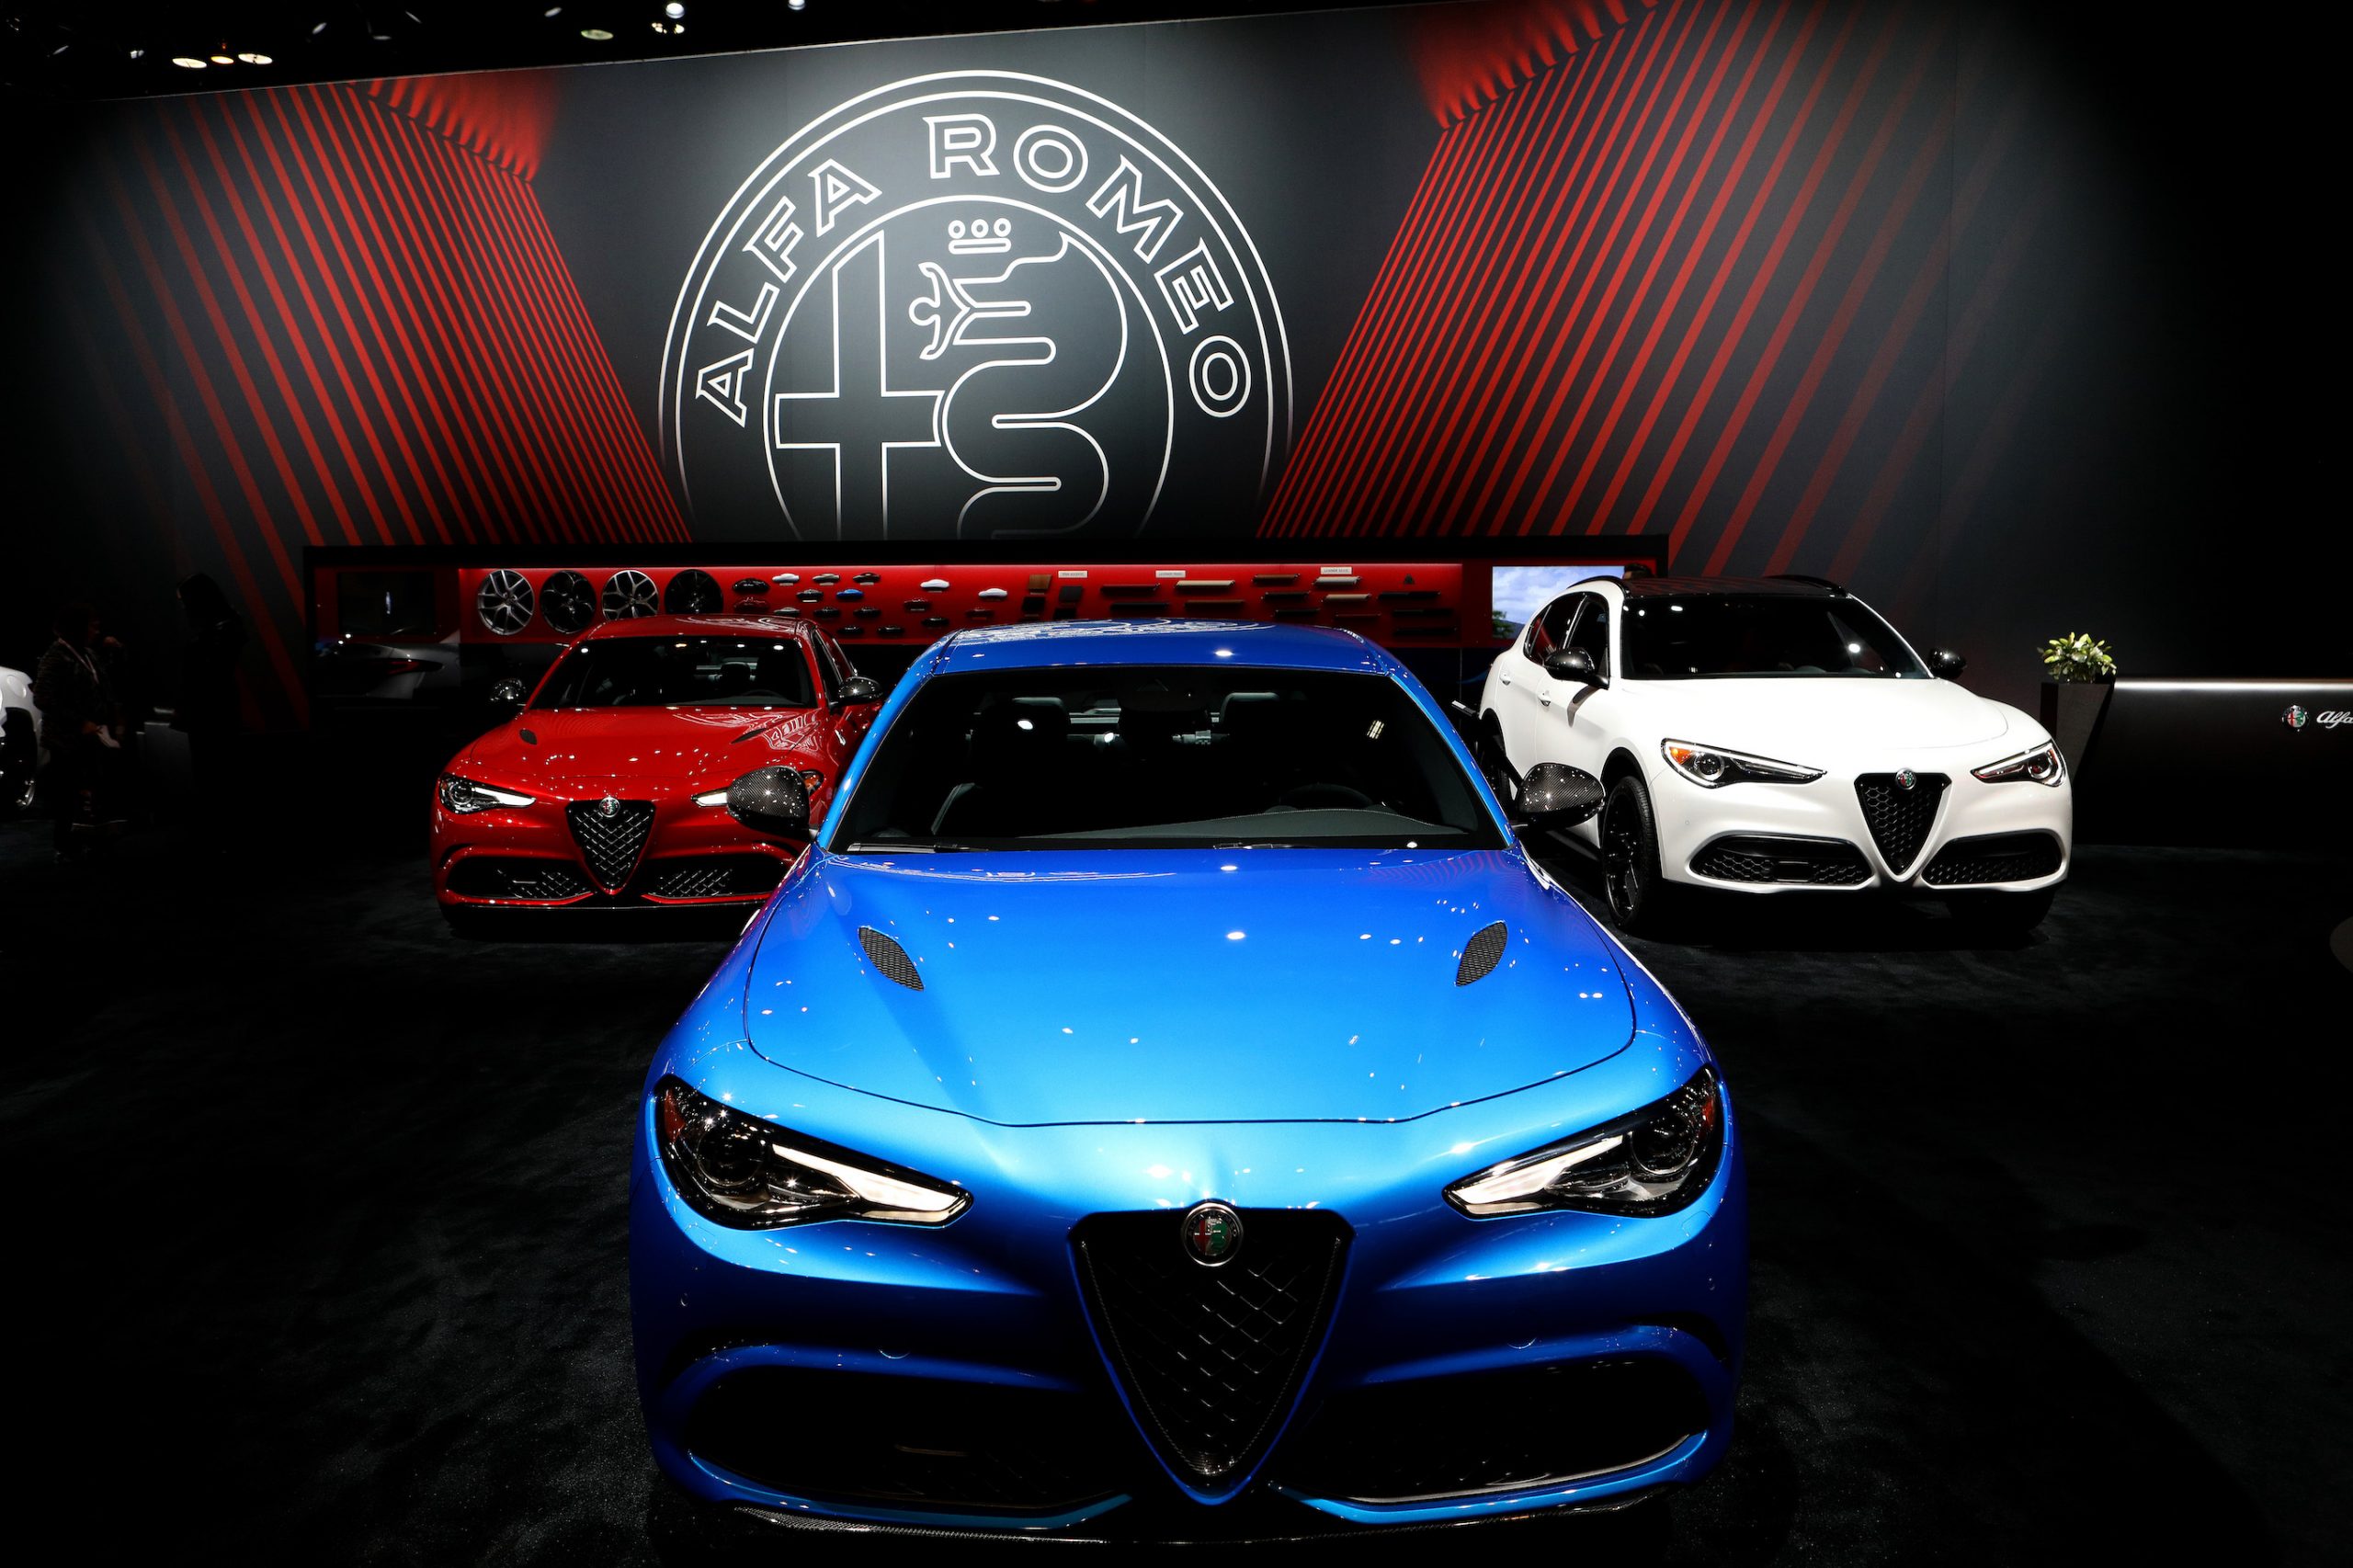 2019 Alfa Romeo Giulia (red and blue) and Alfa Romeo Stelvio are on display at the 111th Annual Chicago Auto Show